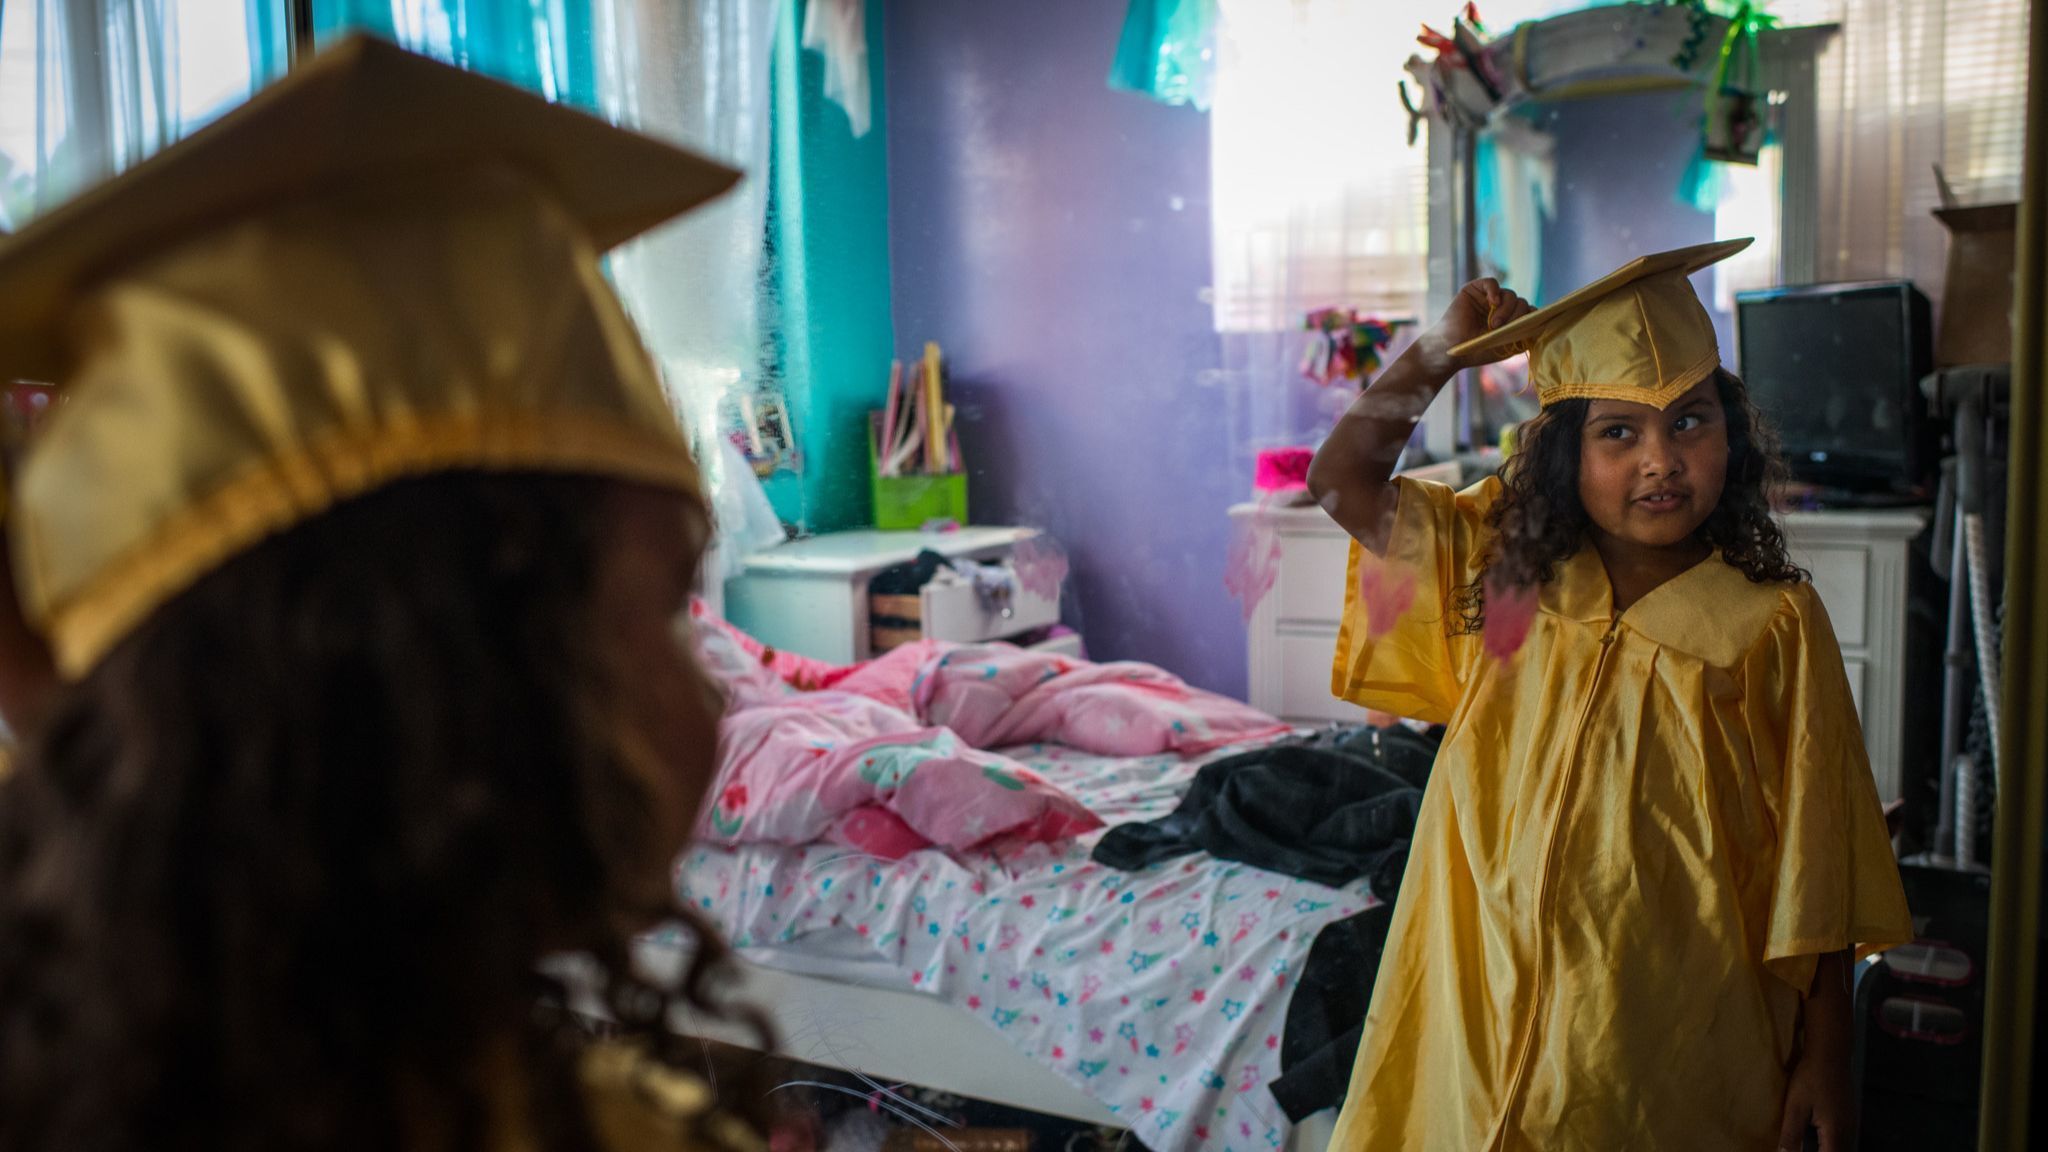 ARLETA, CA - June 21, 2018 Marley prepares for her Kindergarten graduation ceremony at her home in